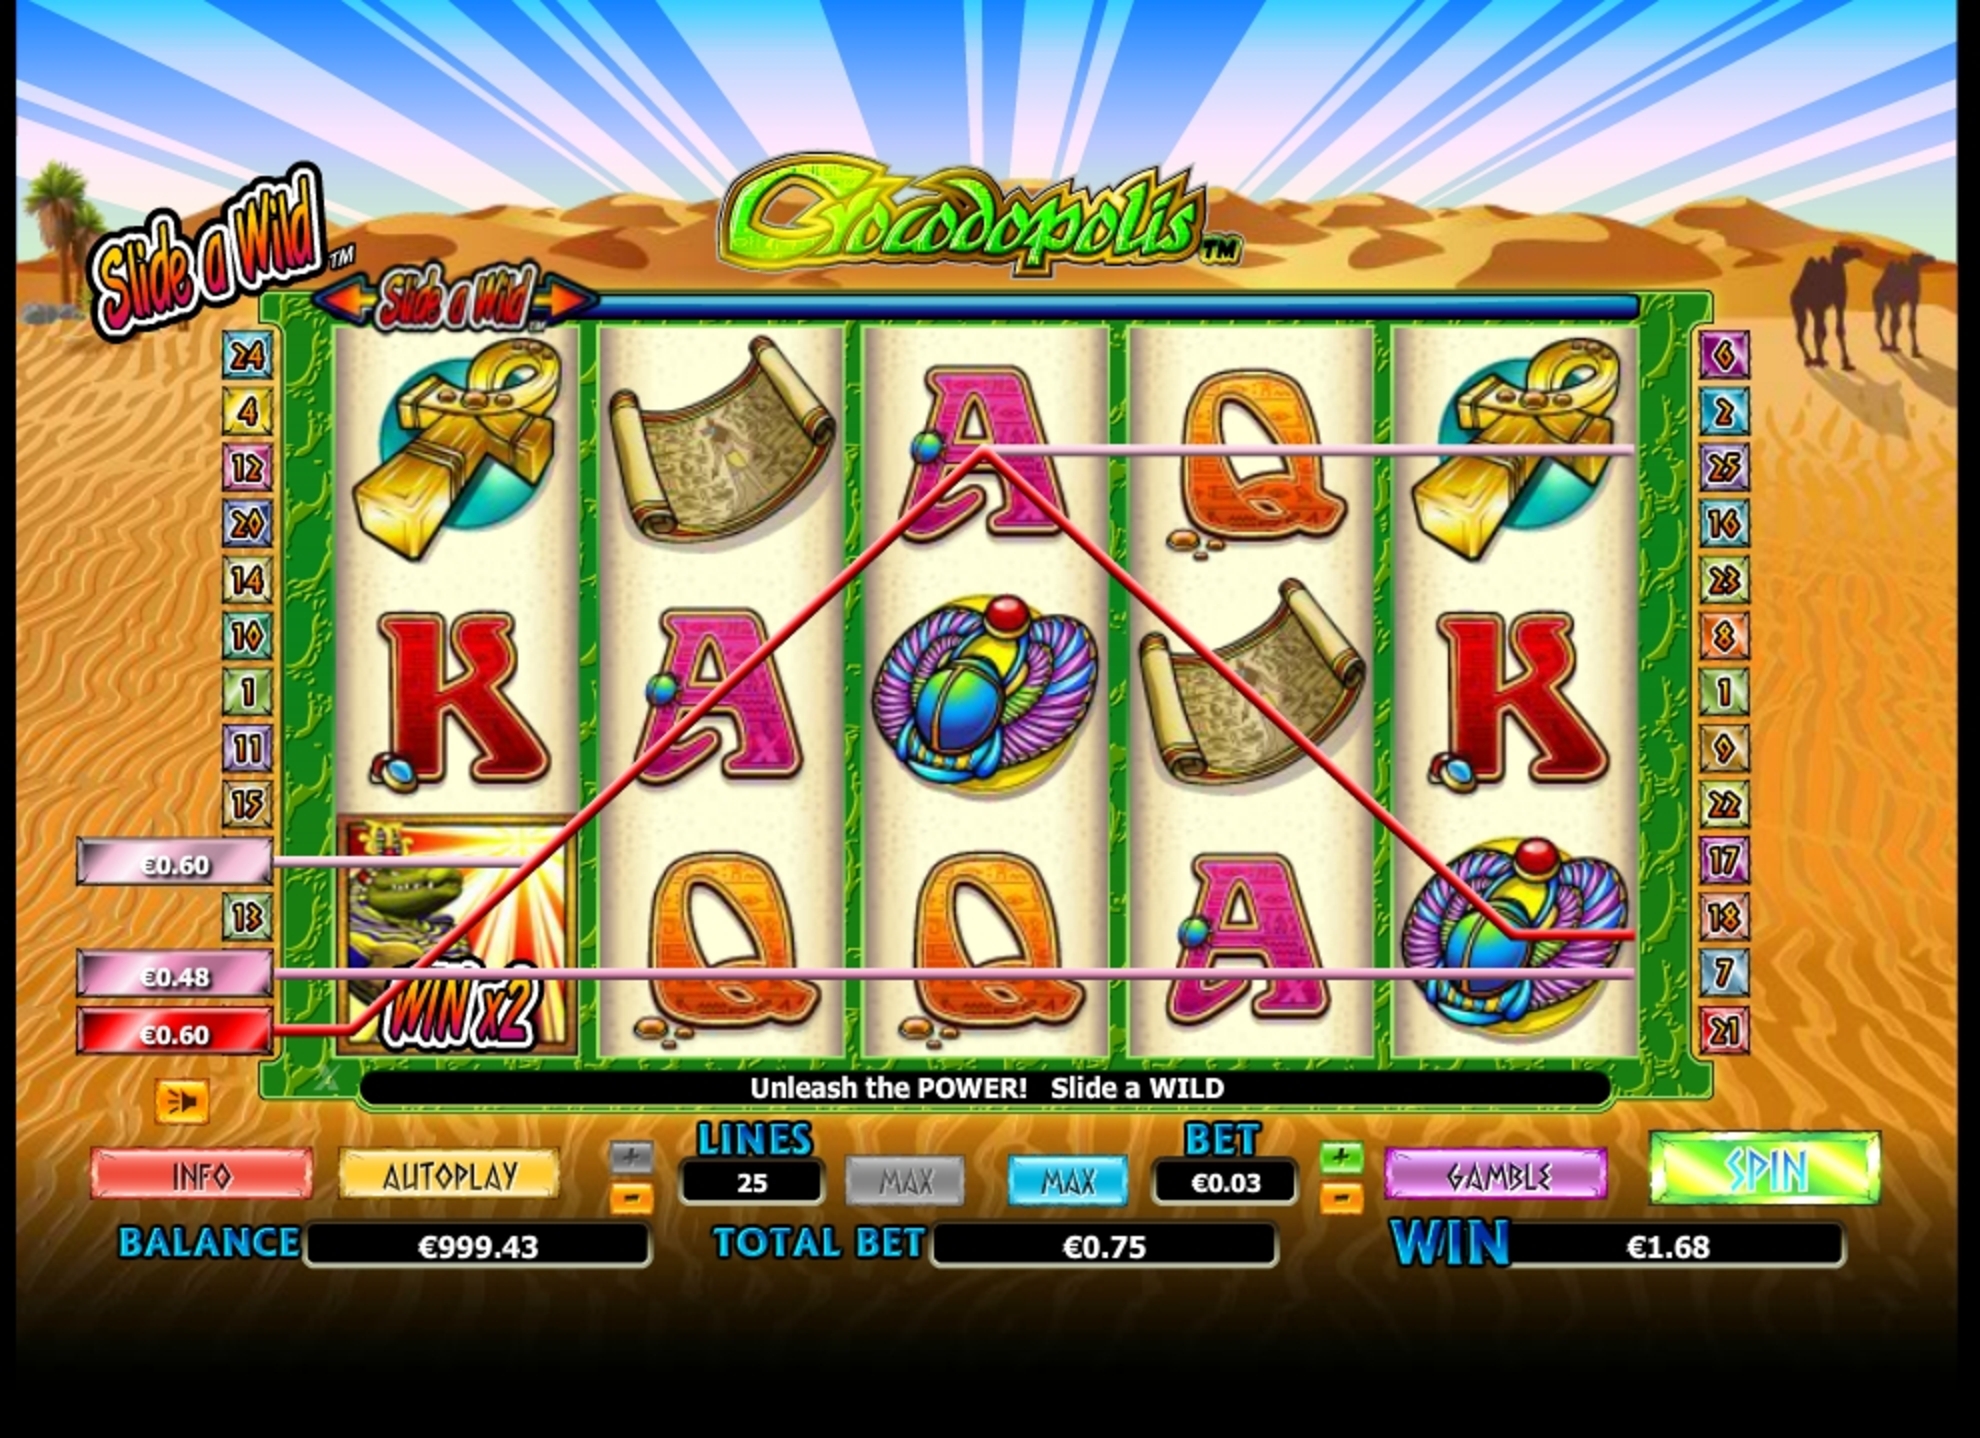 Win Money in Crocodopolis Free Slot Game by NextGen Gaming